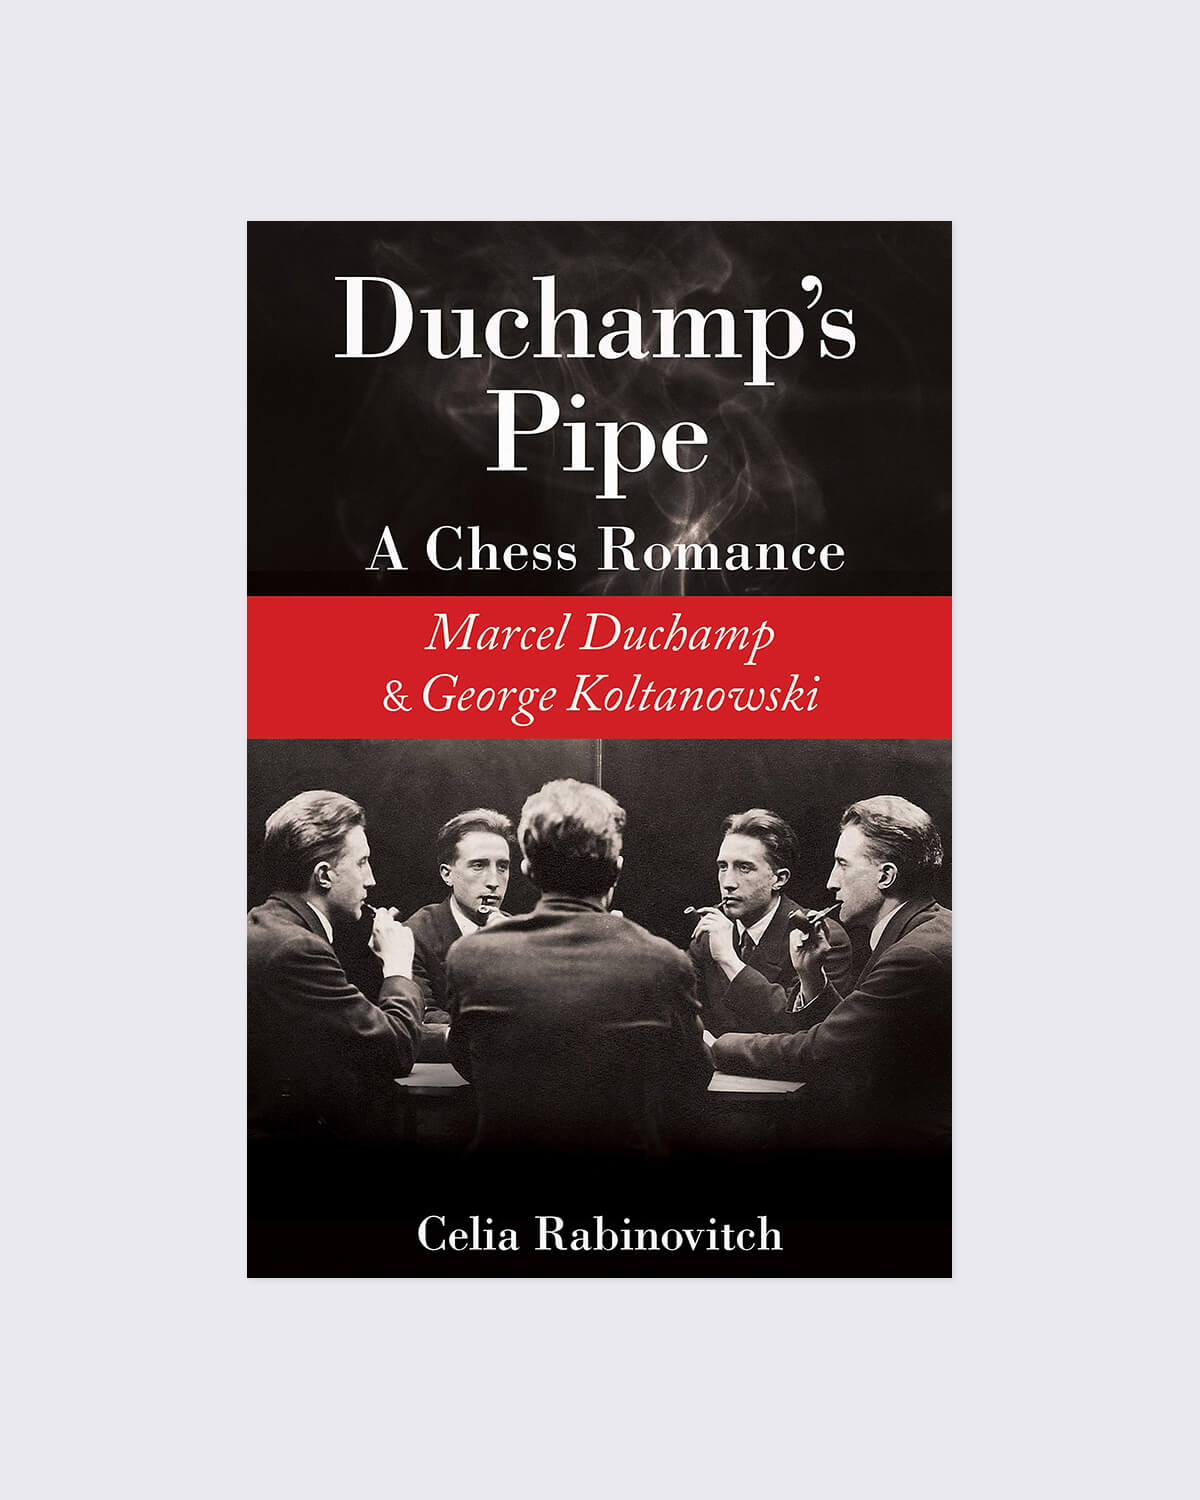 Duchamp's Pipe: A Chess Romance--Marcel Duchamp And George Koltanowski